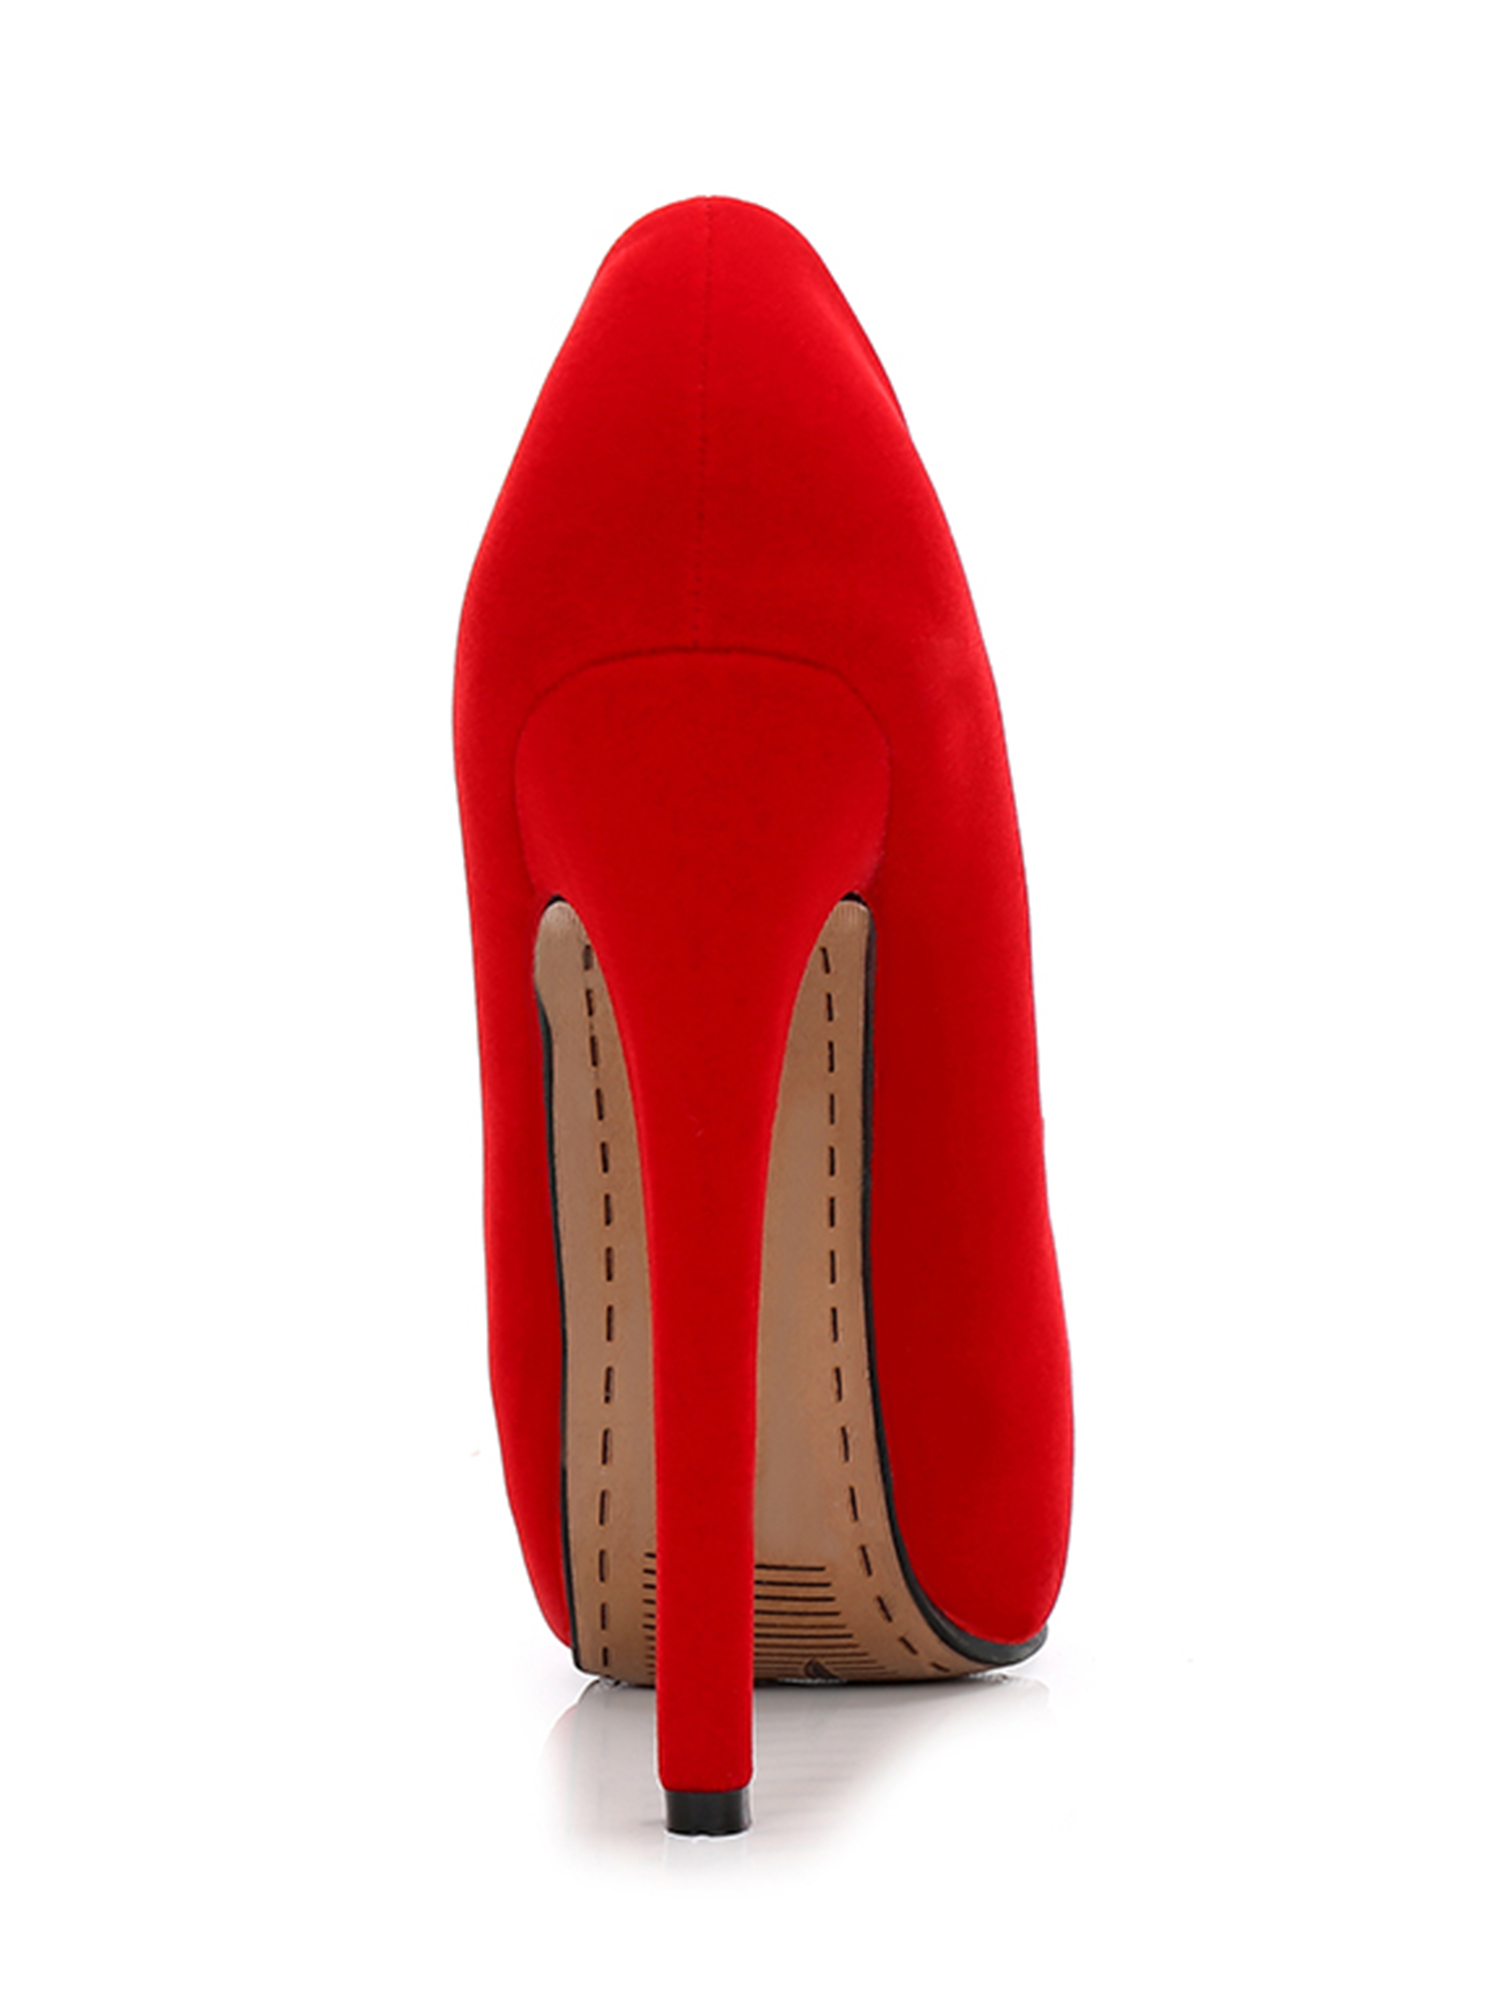 Daeful Women Lightweight High Heel Platform Pump Wedding Stiletto Heels Walking Fashion Dress Shoes Red (14cm) 11 - image 5 of 9